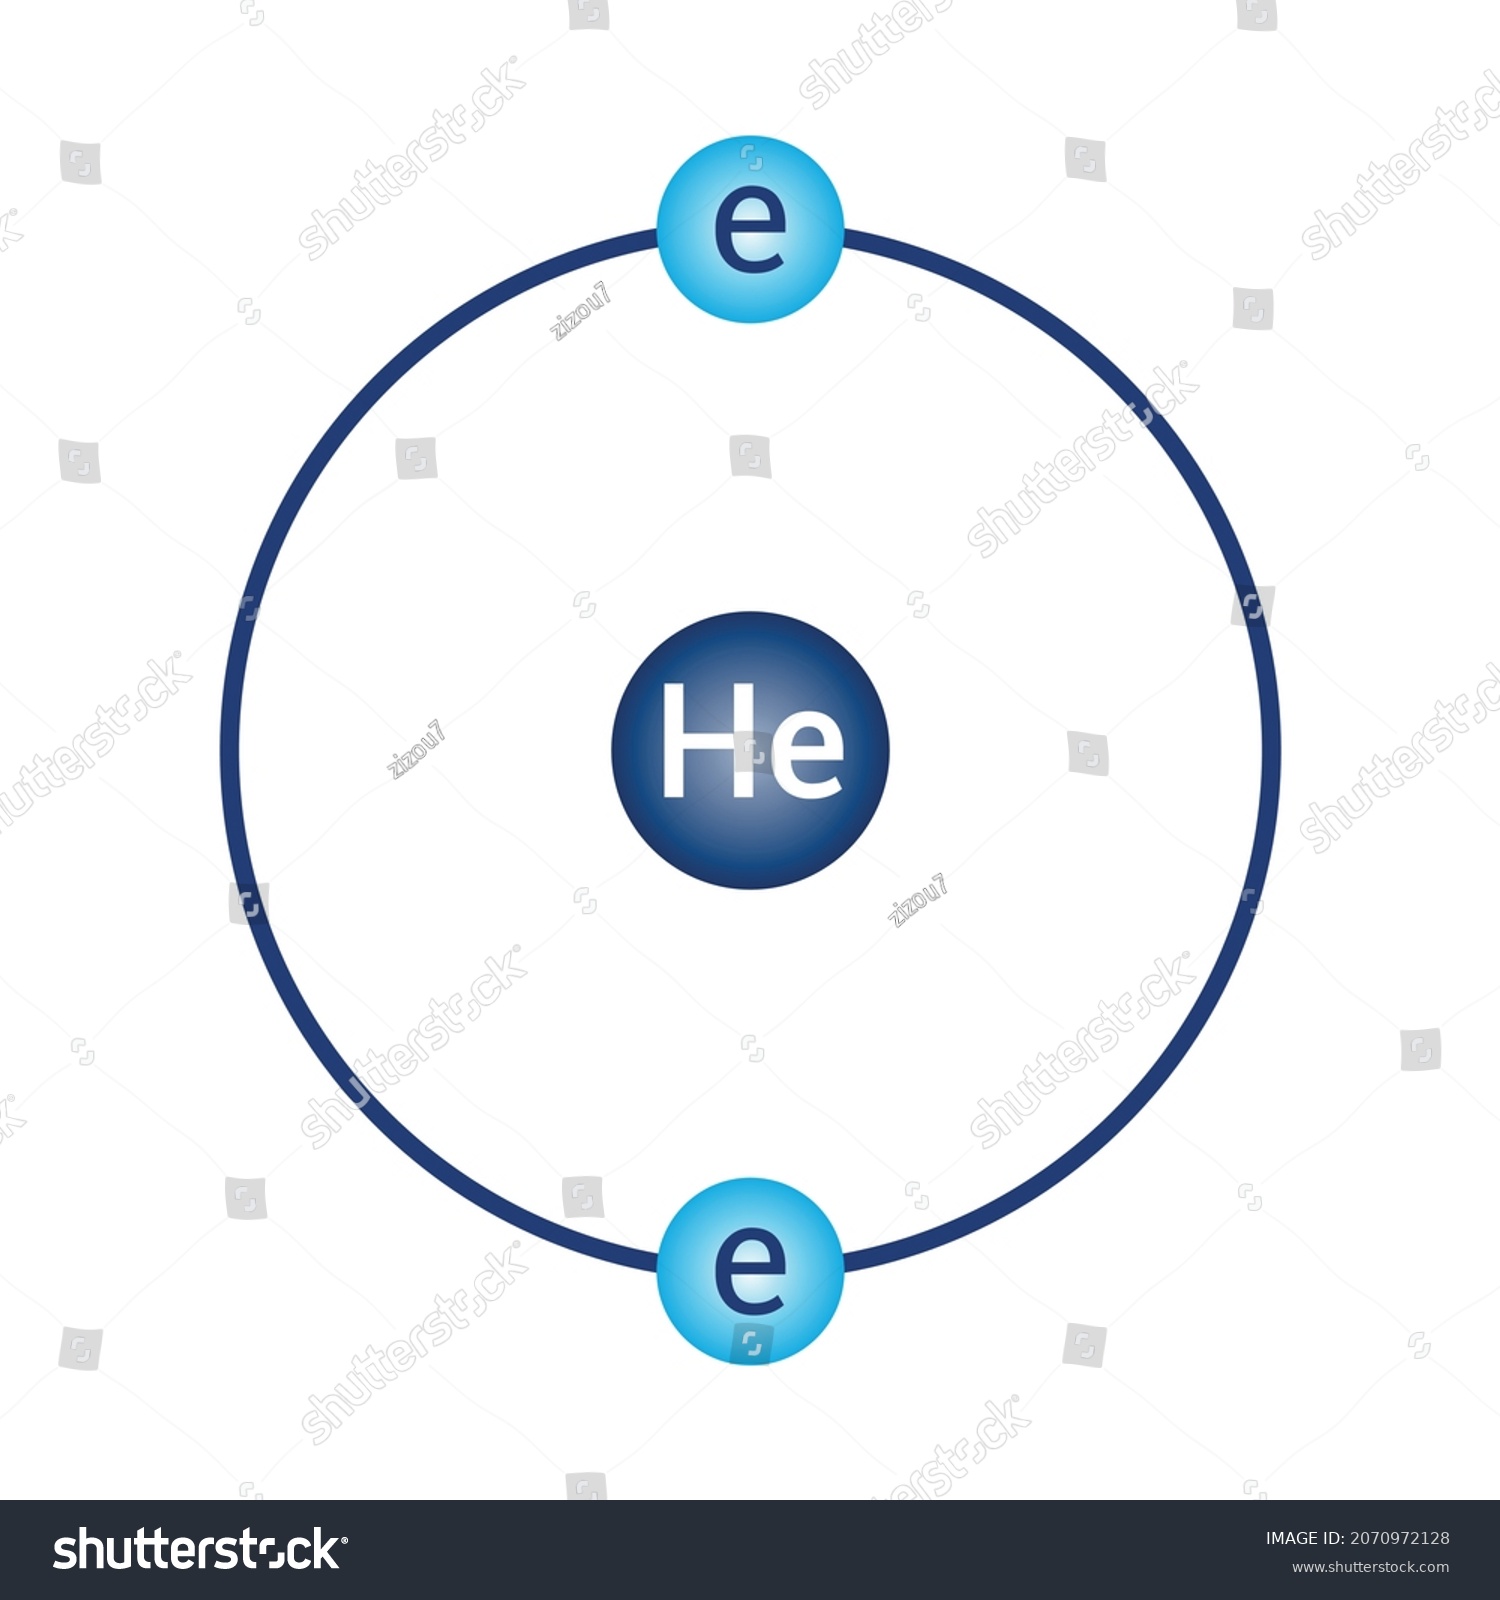 Bohr Model Diagram Helium He Atomic Stock Vector (Royalty Free